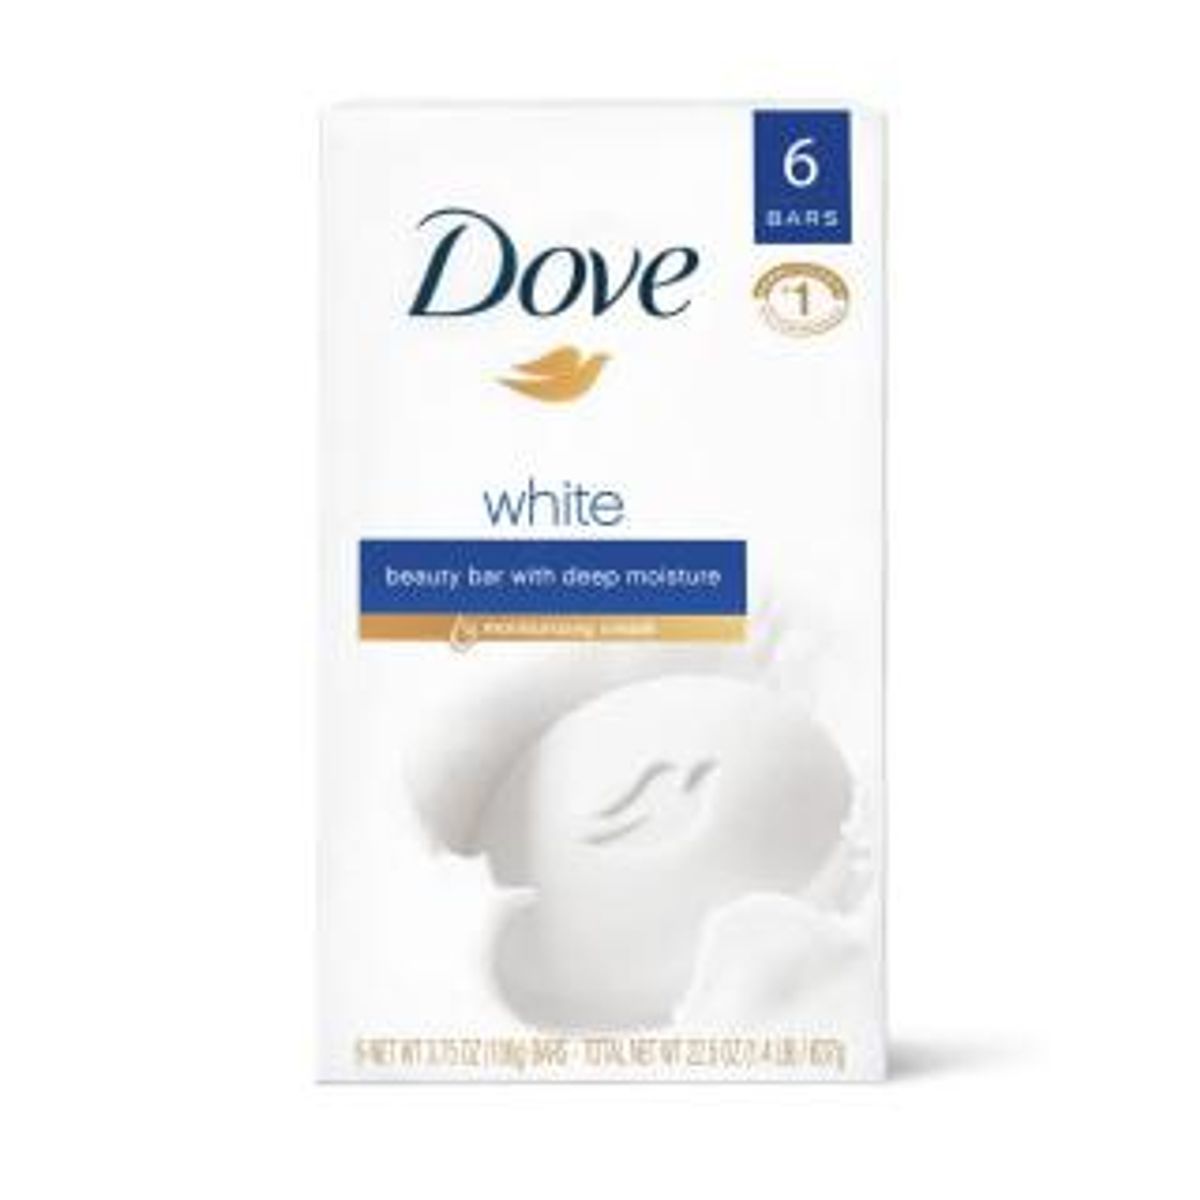 dove white beauty bar